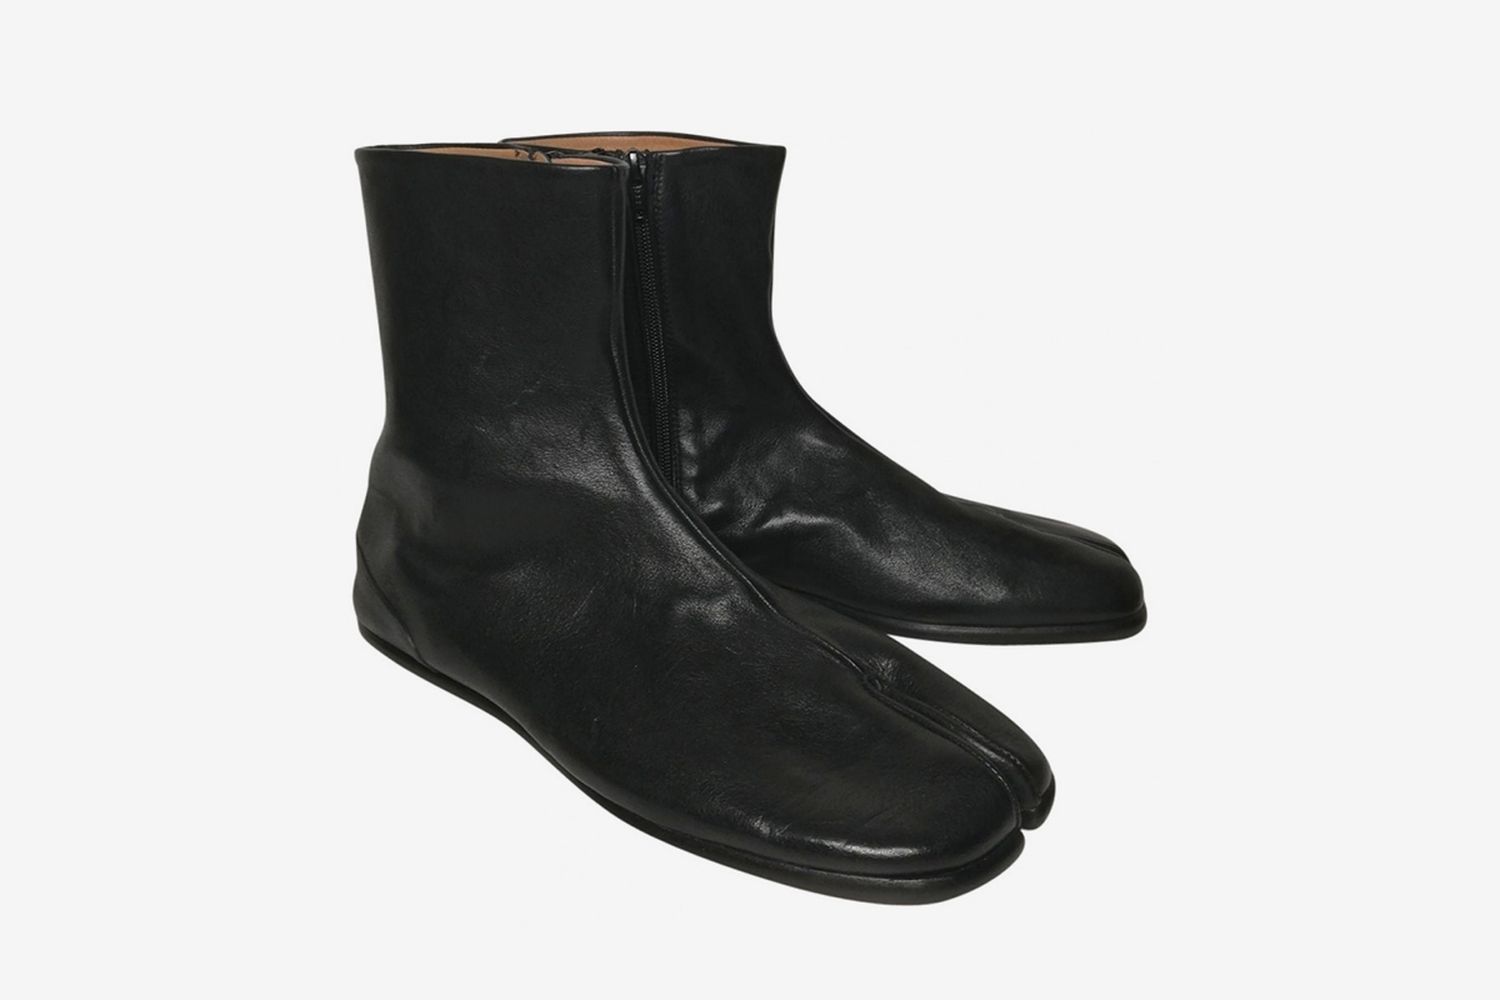 Leather Tabi Boots